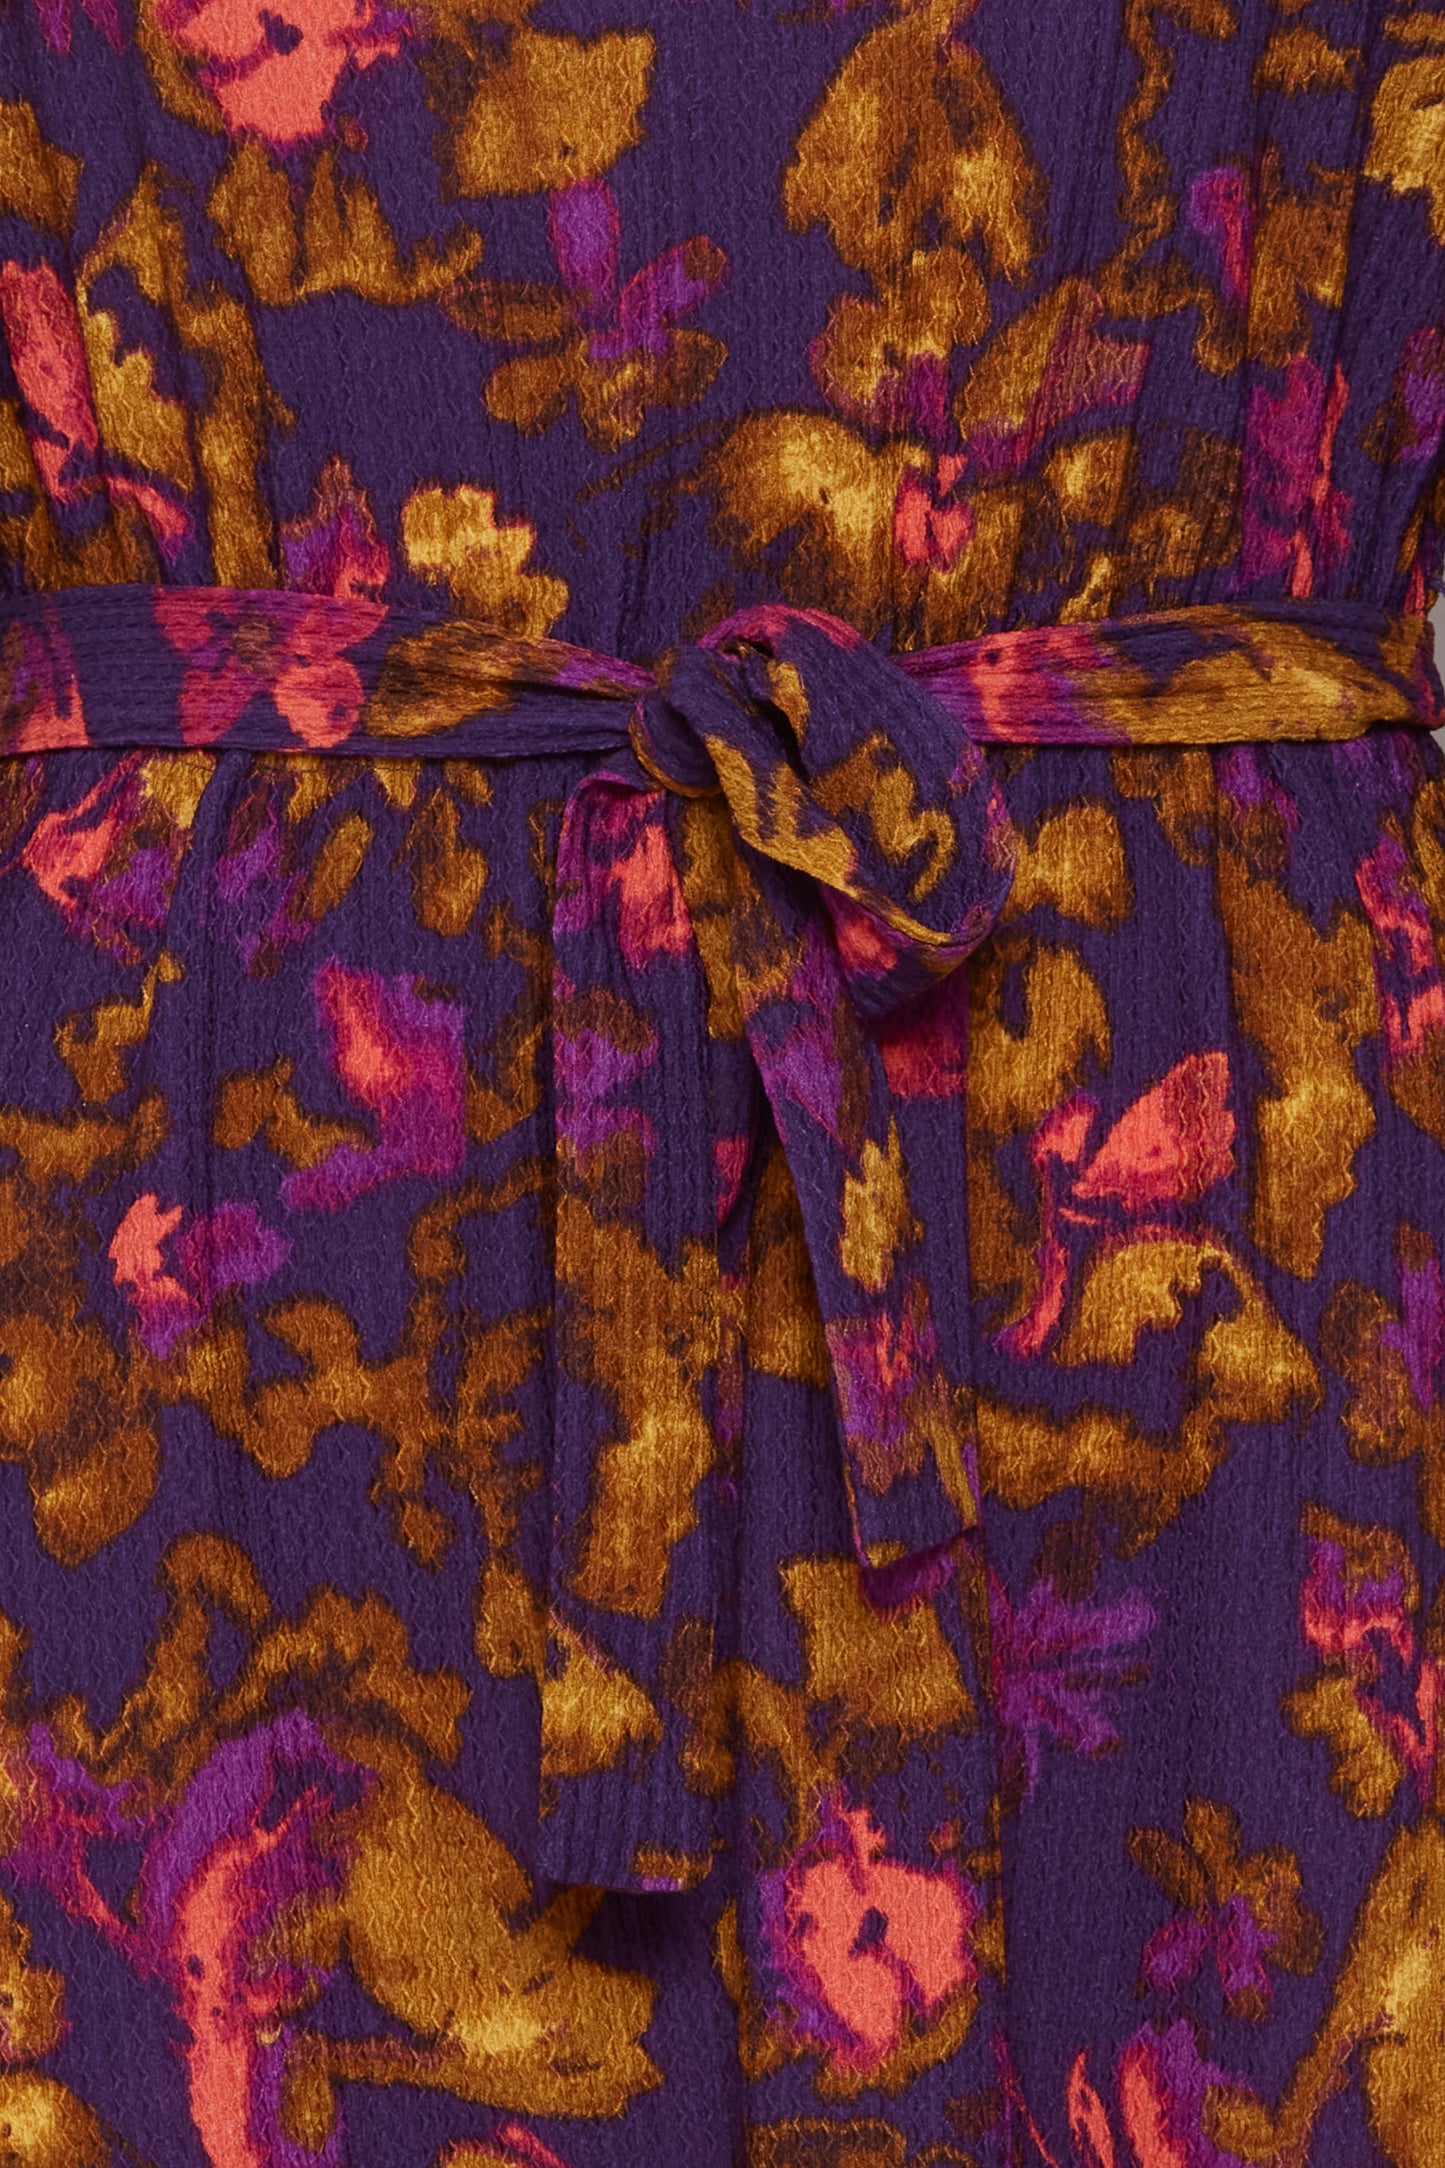 Midi Jersey Dress (purple flowers)